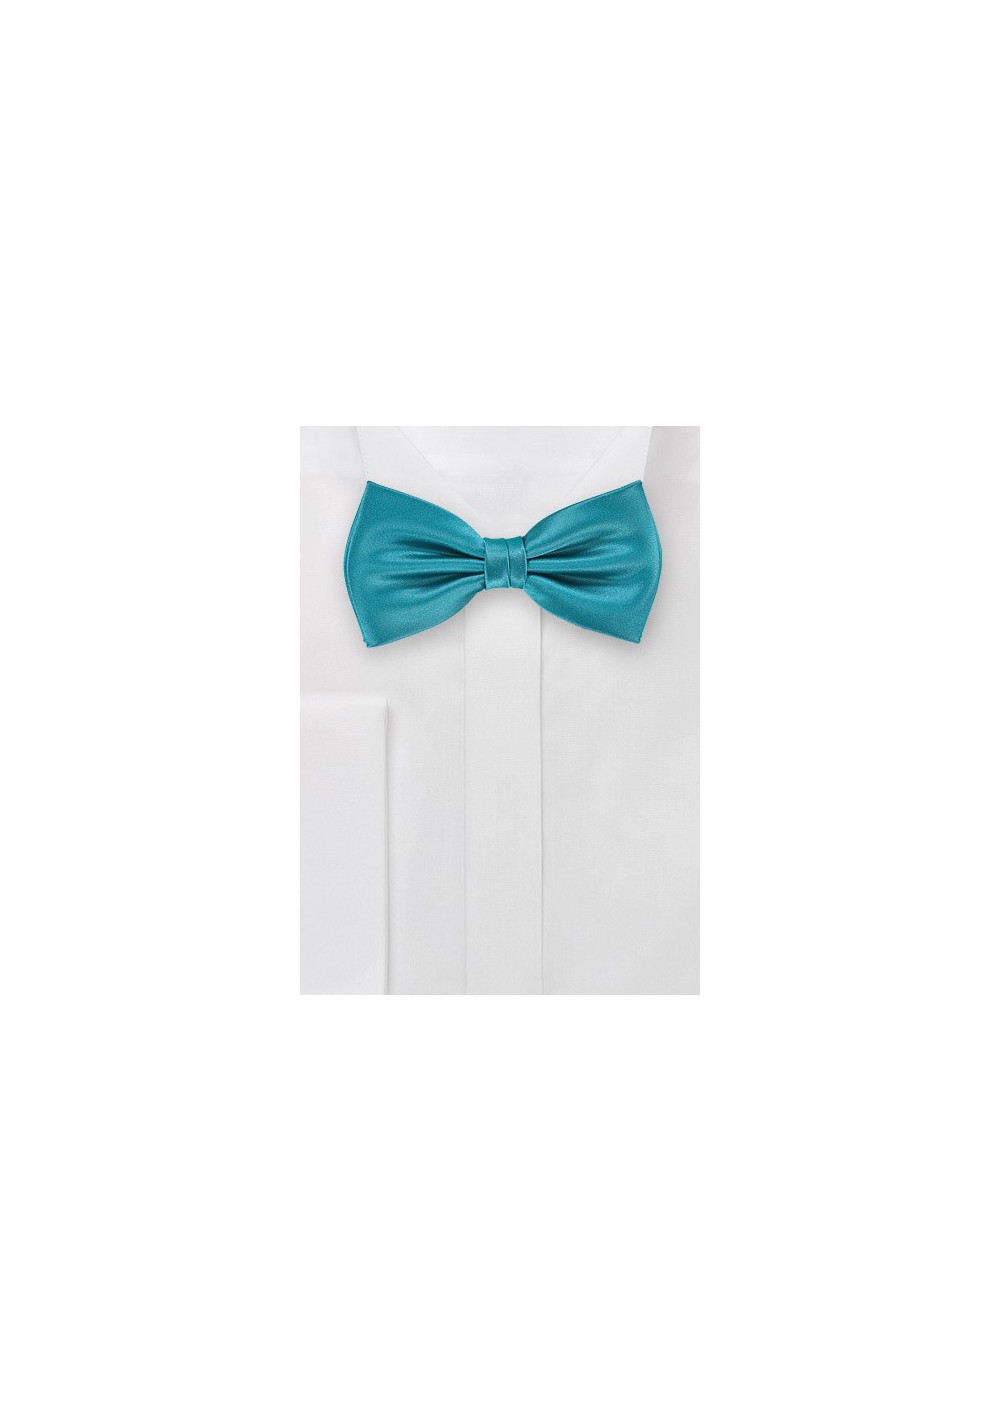 Adriatic Blue Bow Tie